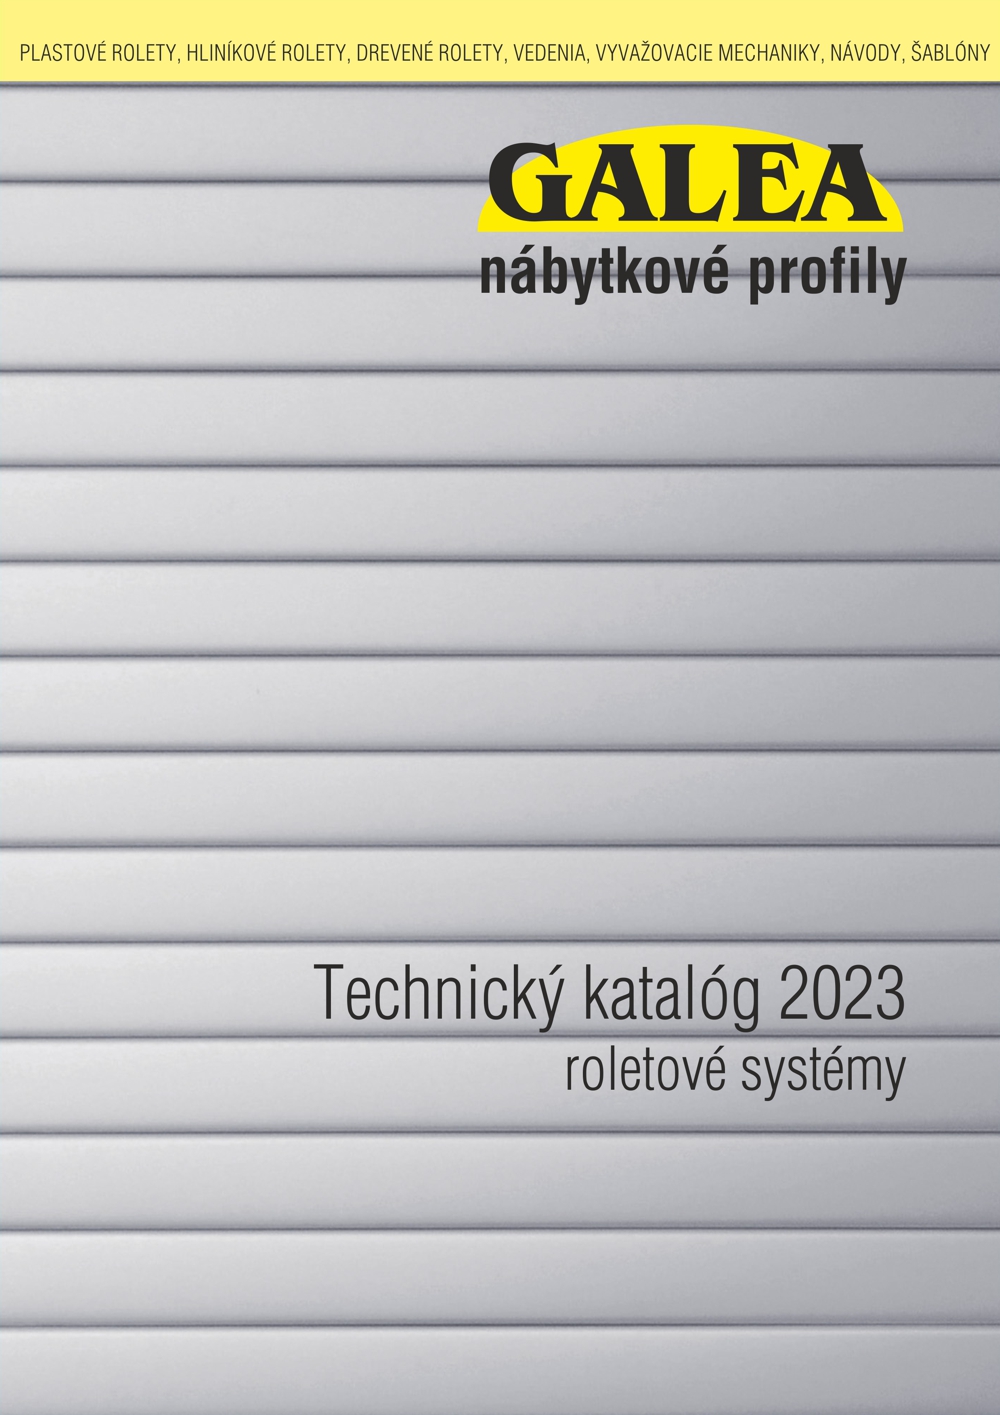 Katalog 2023 Technicky